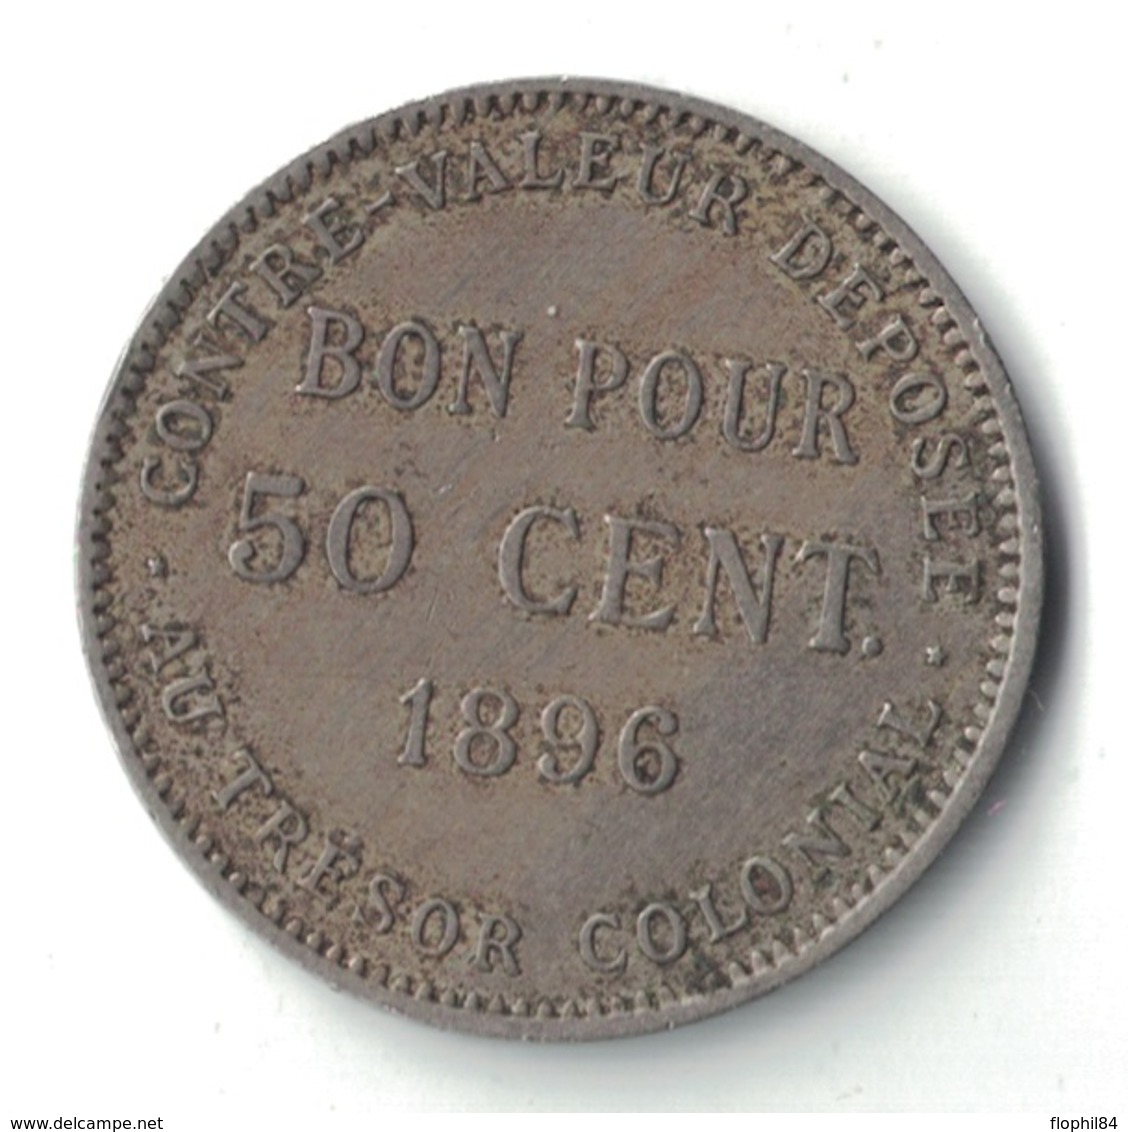 REUNION - ILE DE LA REUNION - 50 CENT DE 1896. - Réunion